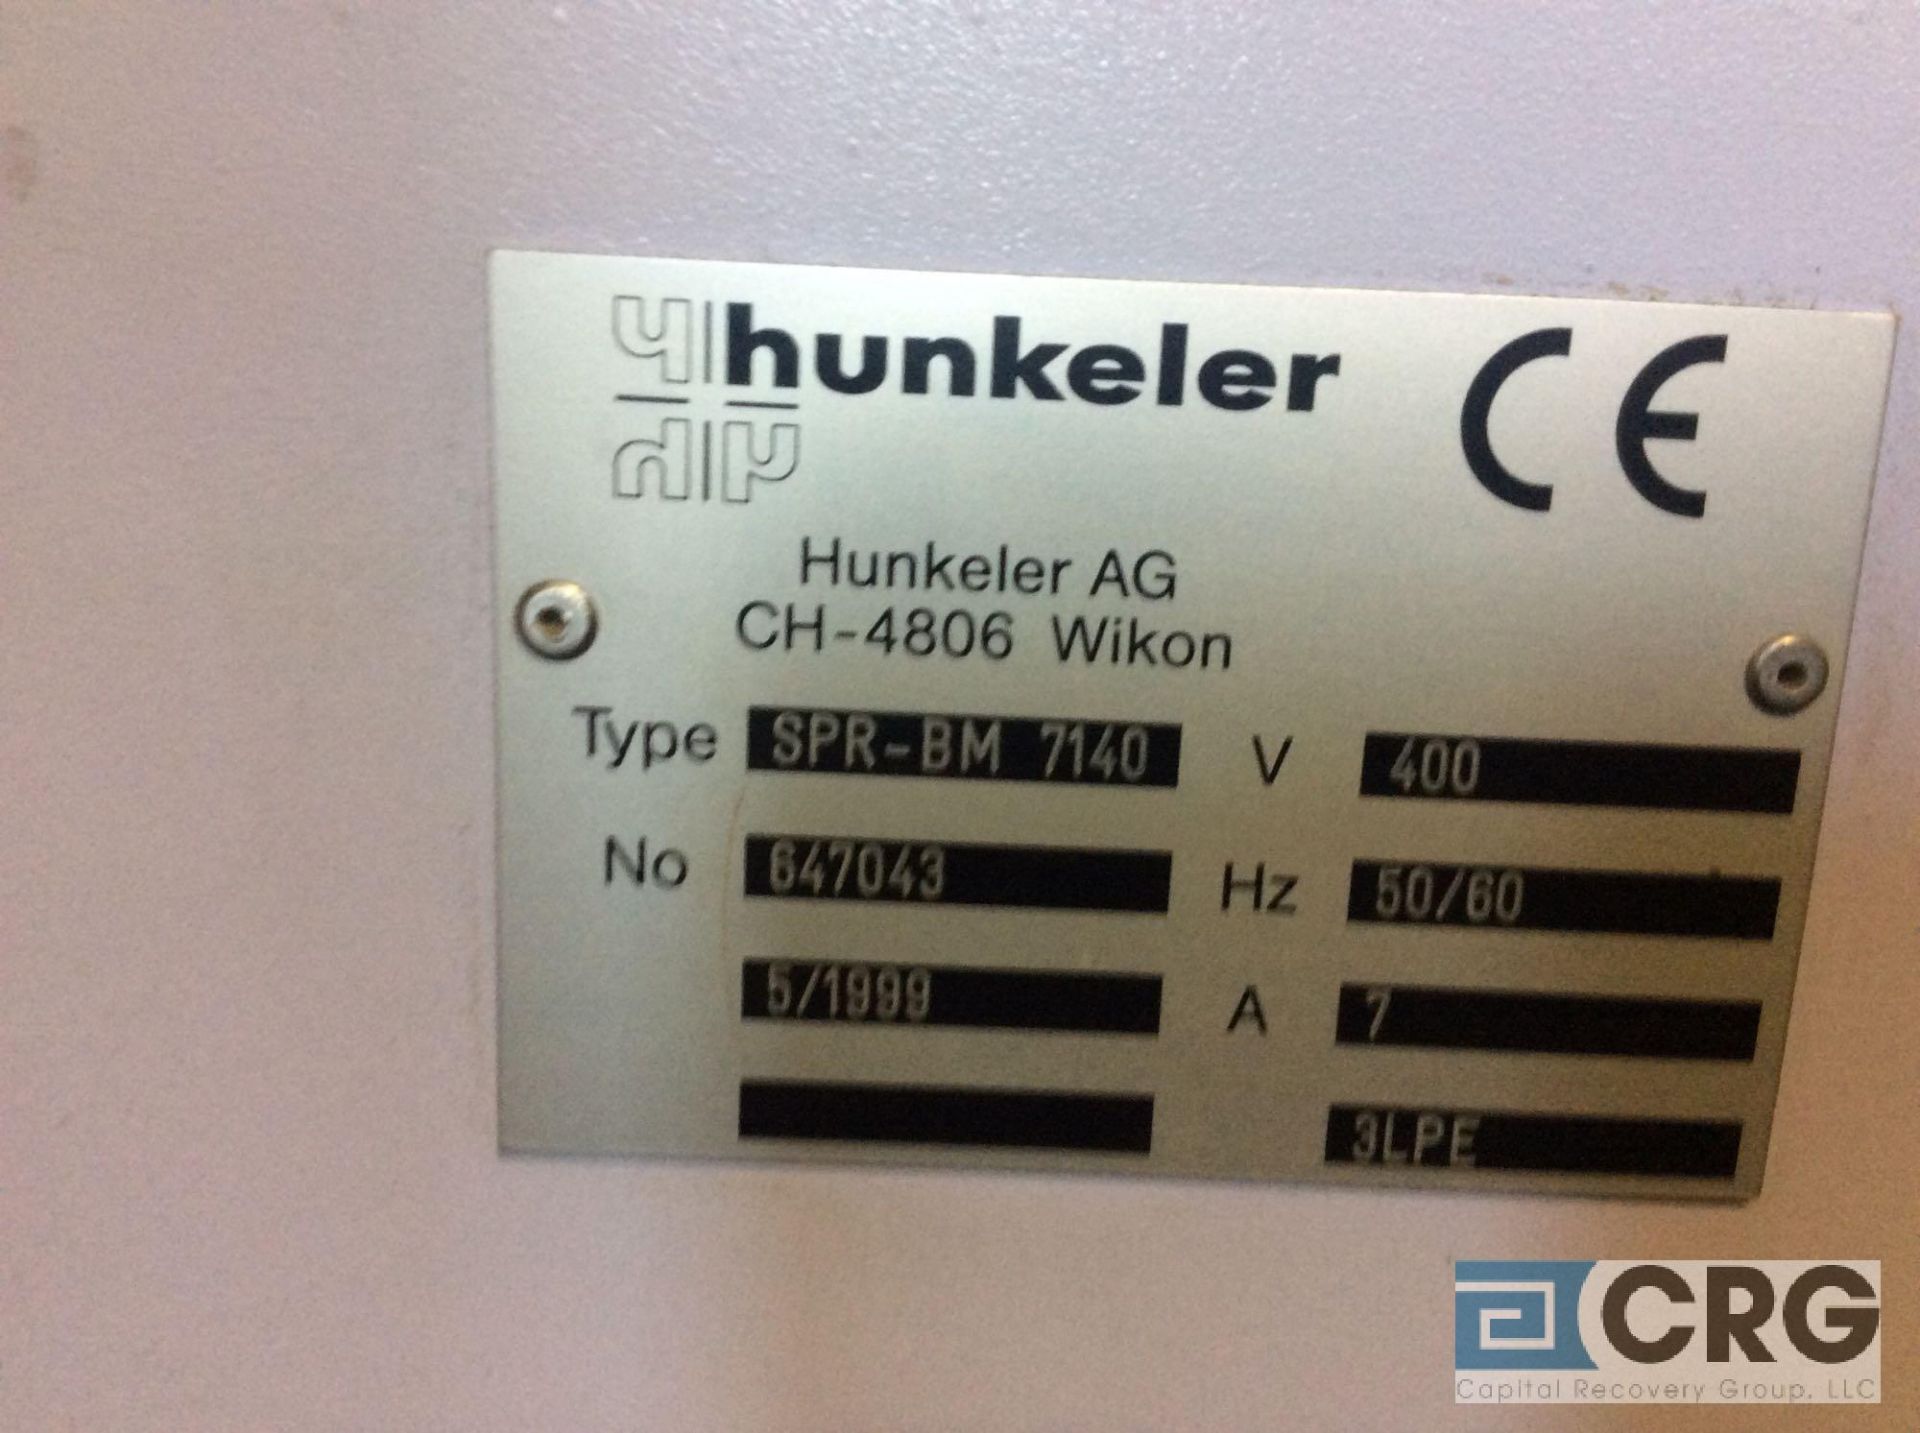 Hunkeler Sprinter folding machine, type SPR-BM 7140, serial number 647043 - Image 5 of 5